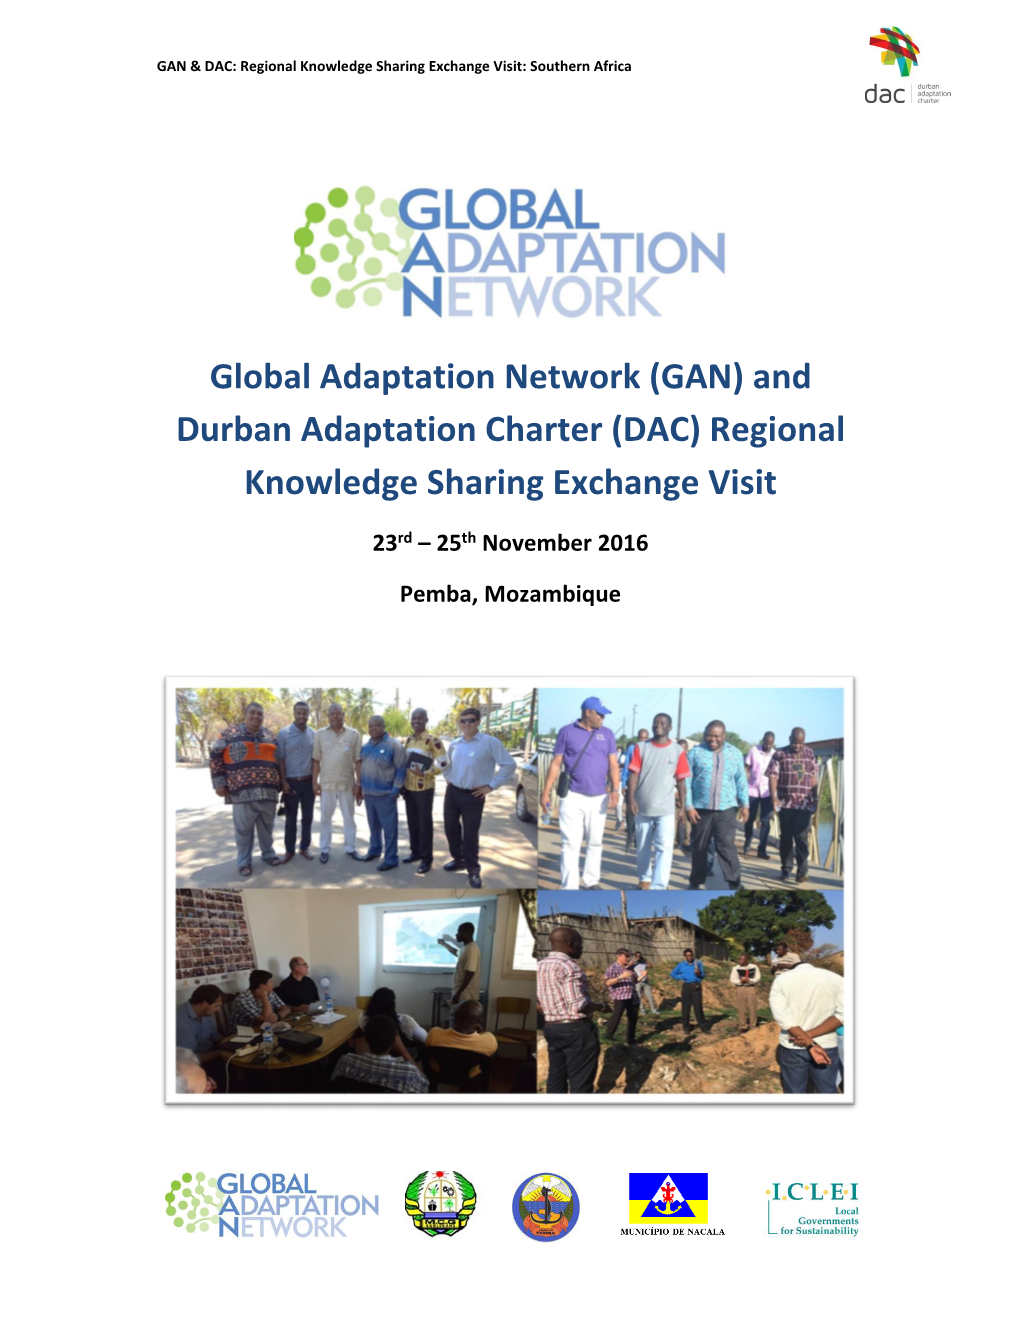 Global Adaptation Network (GAN) and Durban Adaptation Charter (DAC) Regional Knowledge Sharing Exchange Visit